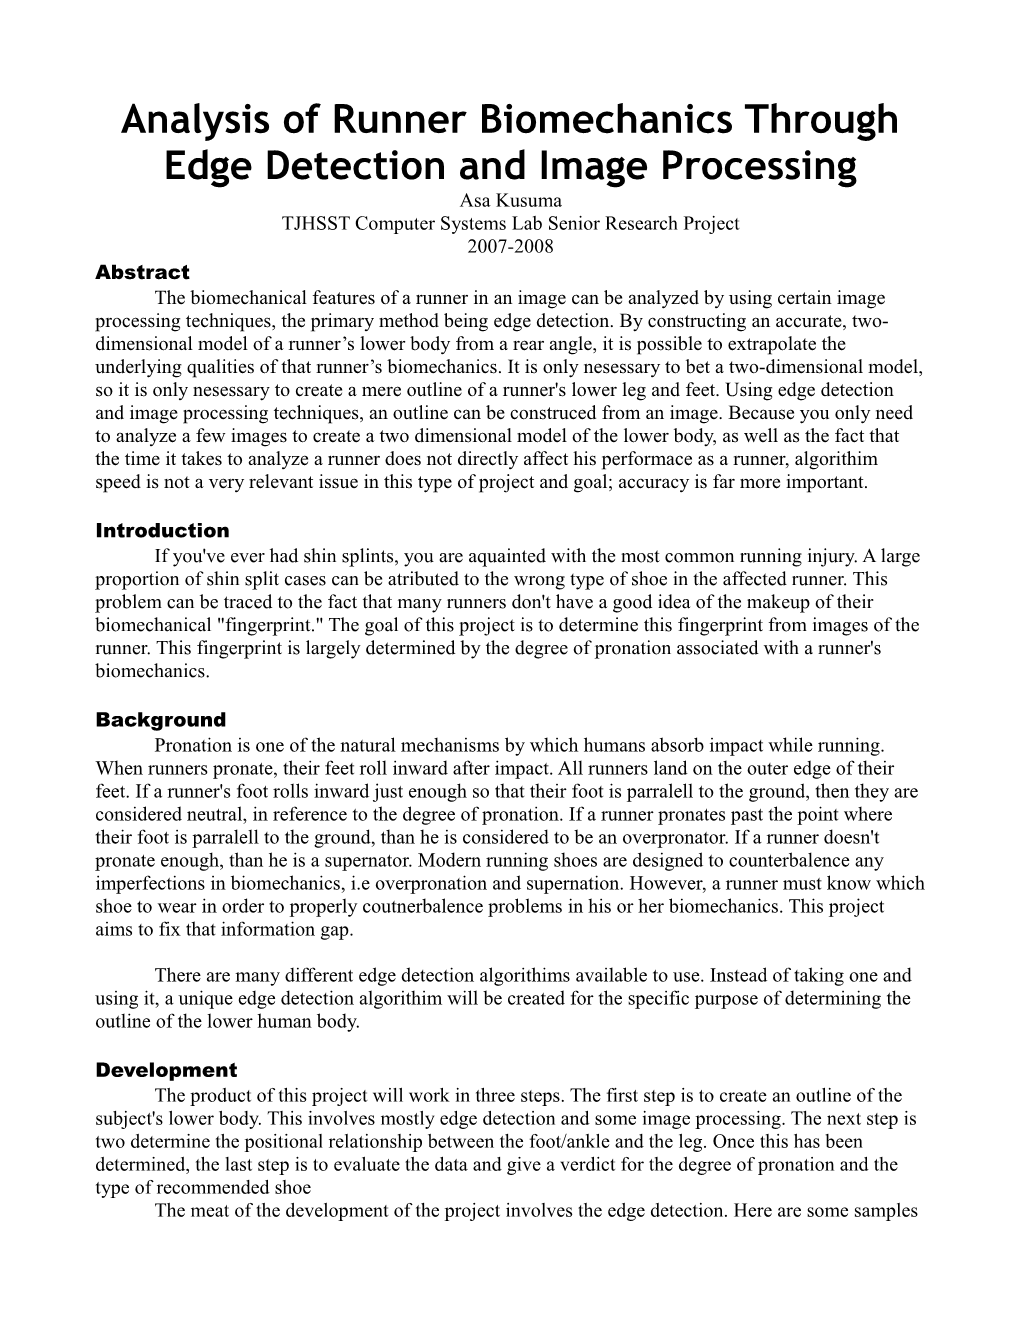 Analysis of Runner Biomechanics Through Edge Detection and Image Processing